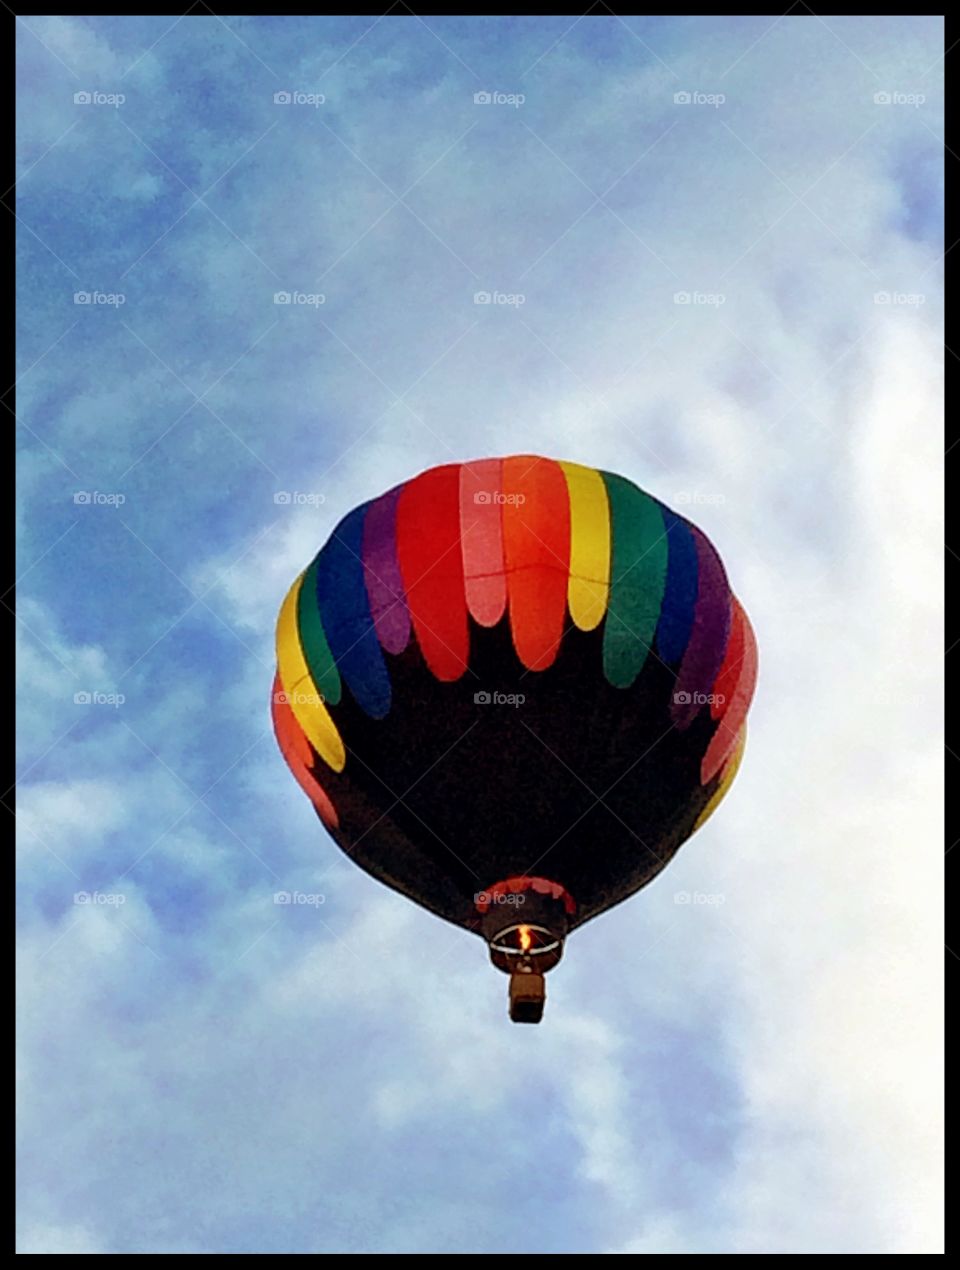 Balloon ride